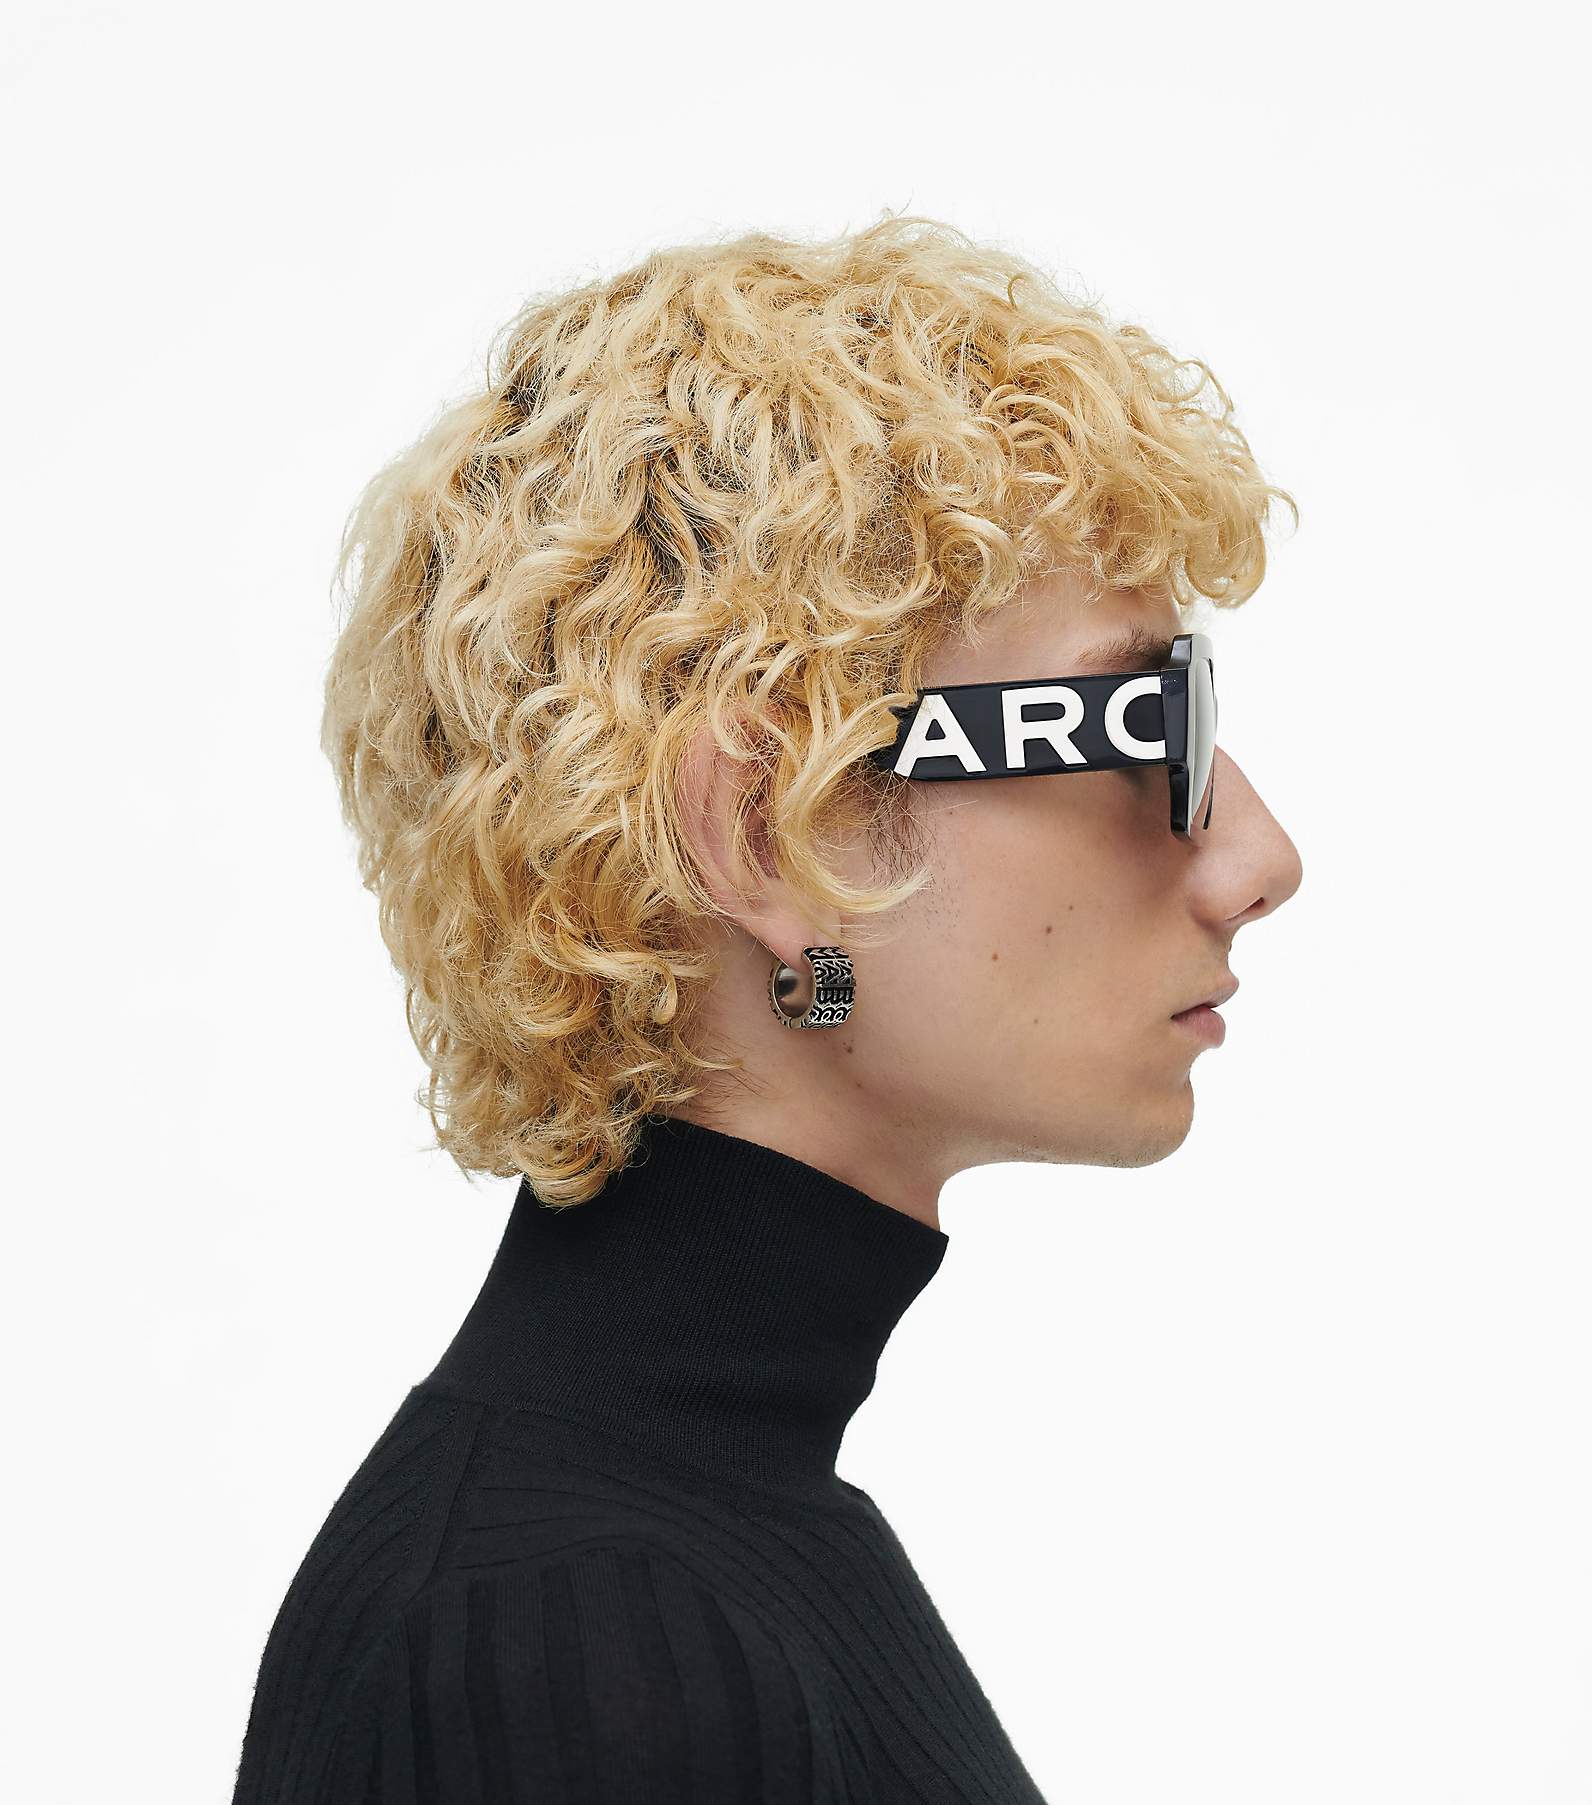 Marc Jacobs MARC 712/S Shield Sunglasses